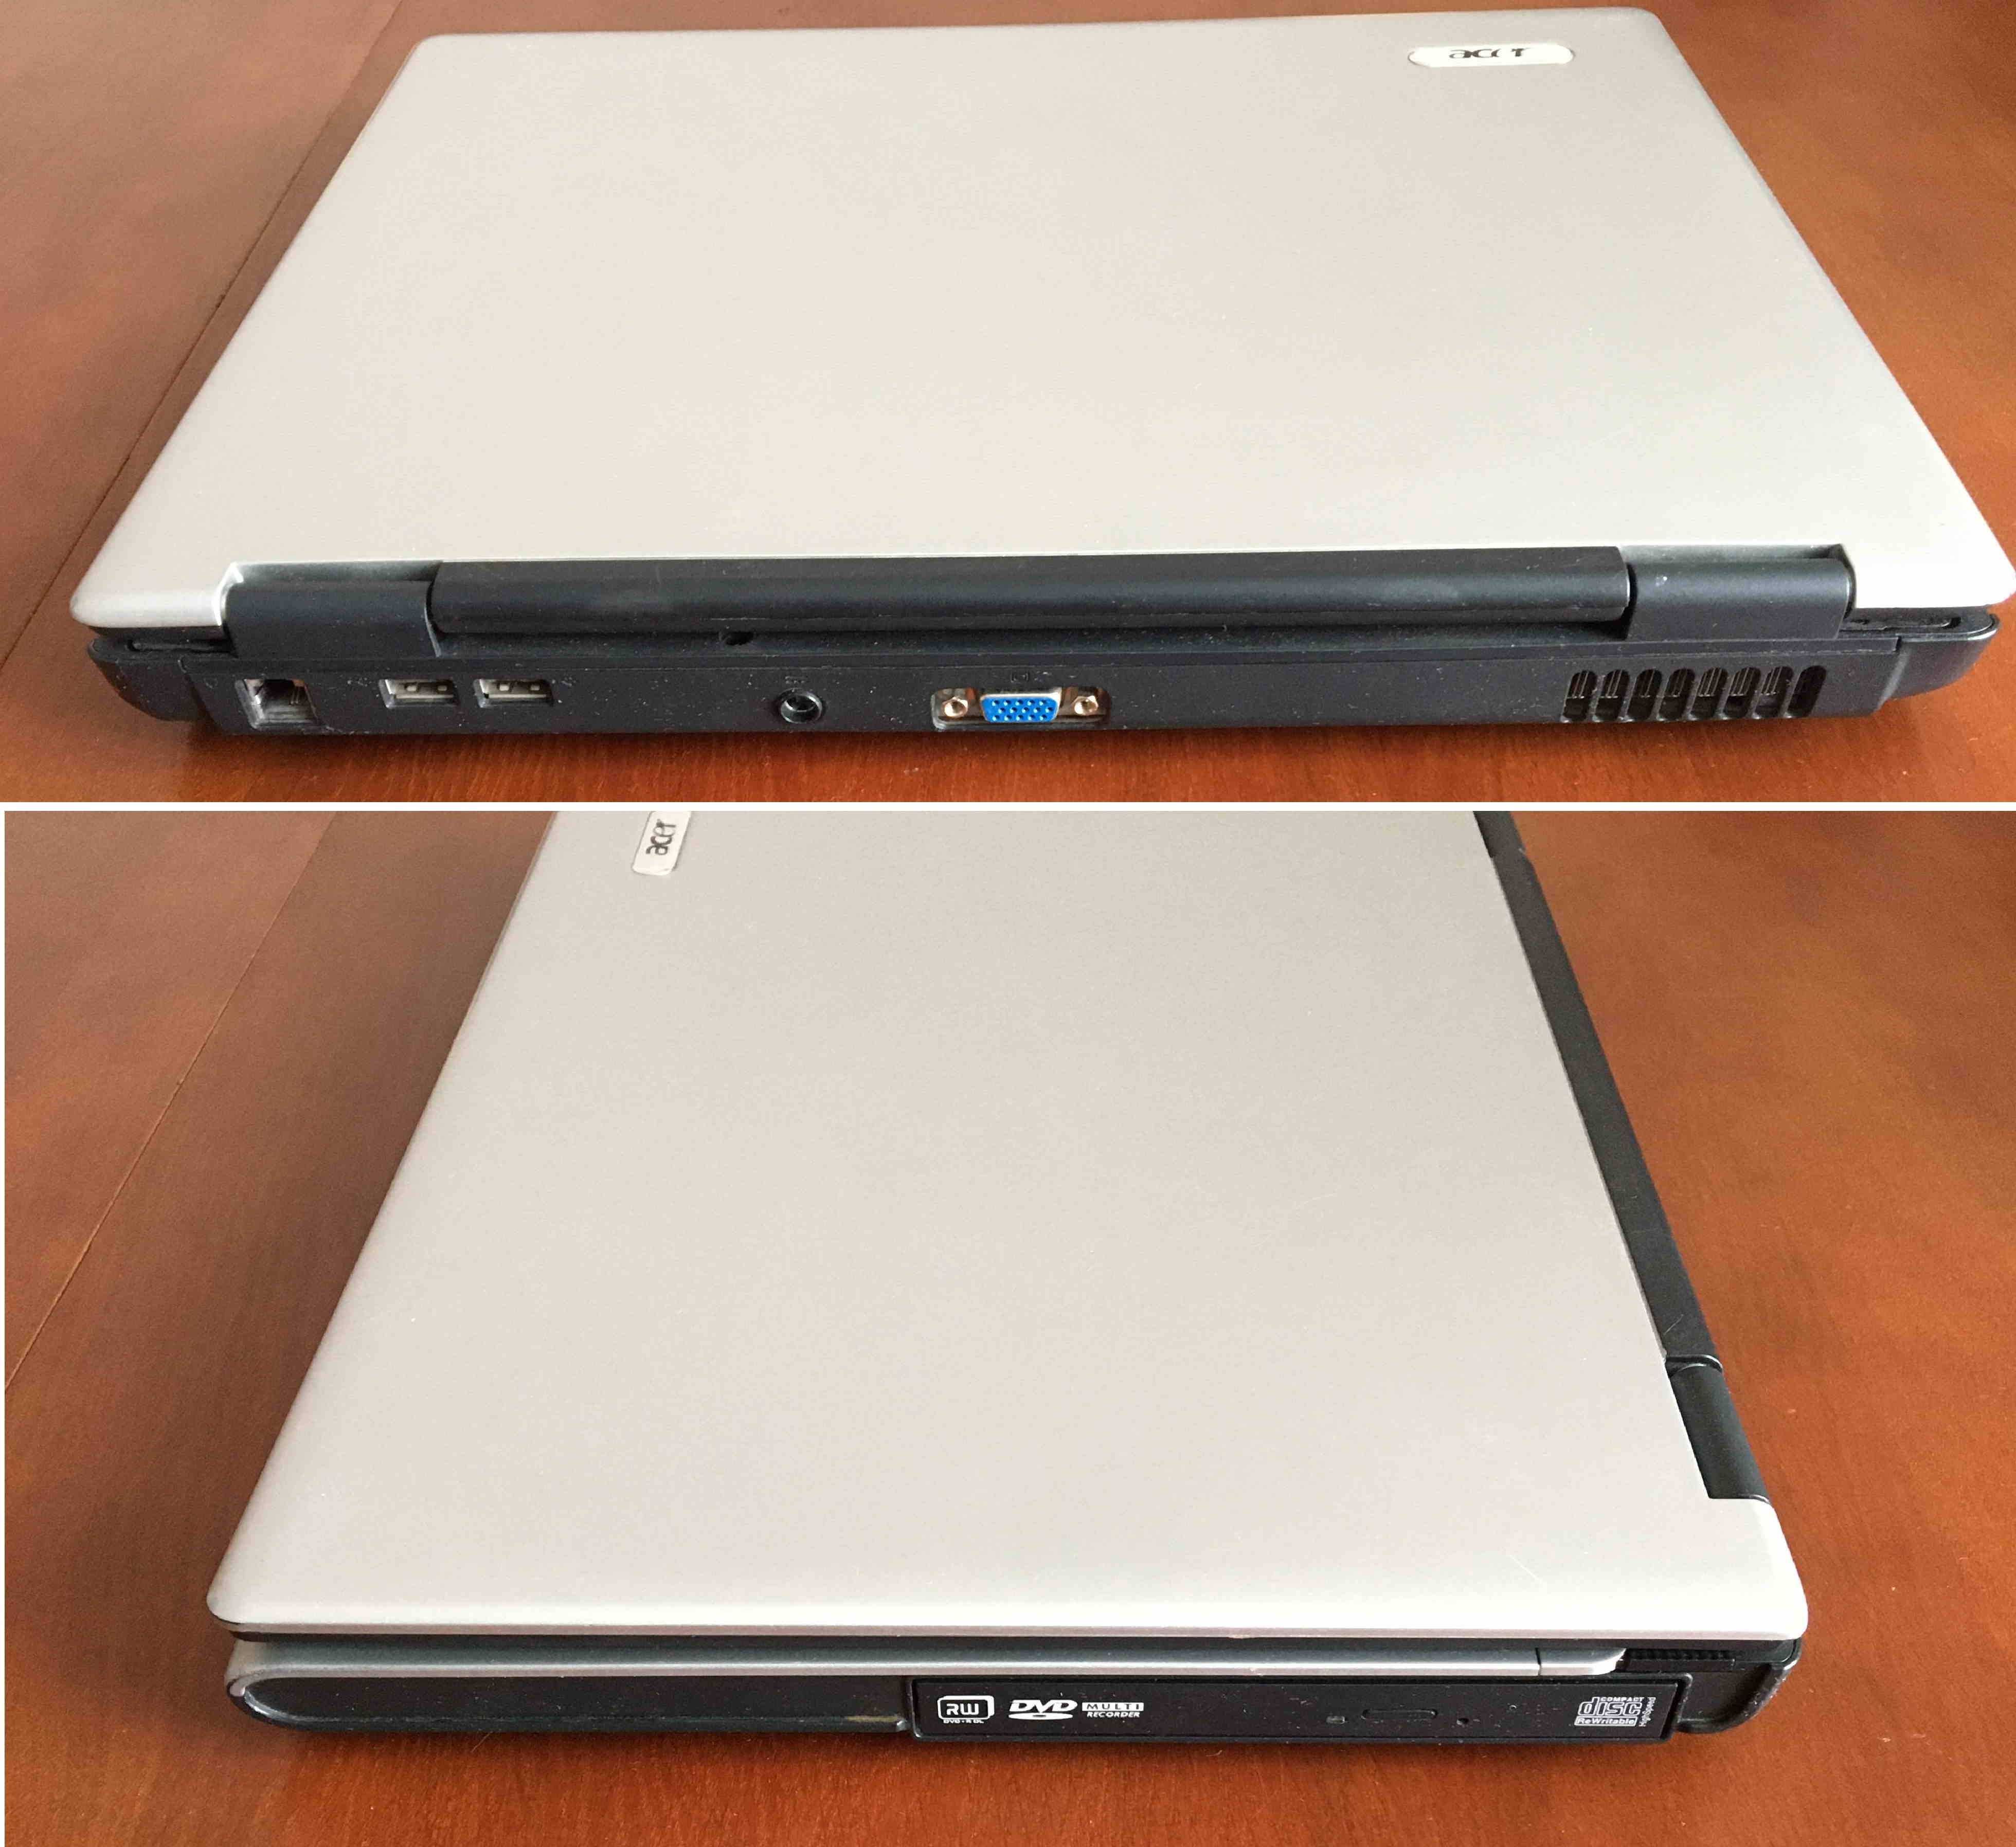 Ноутбук Acer aspire 5100 BL51 ремонт